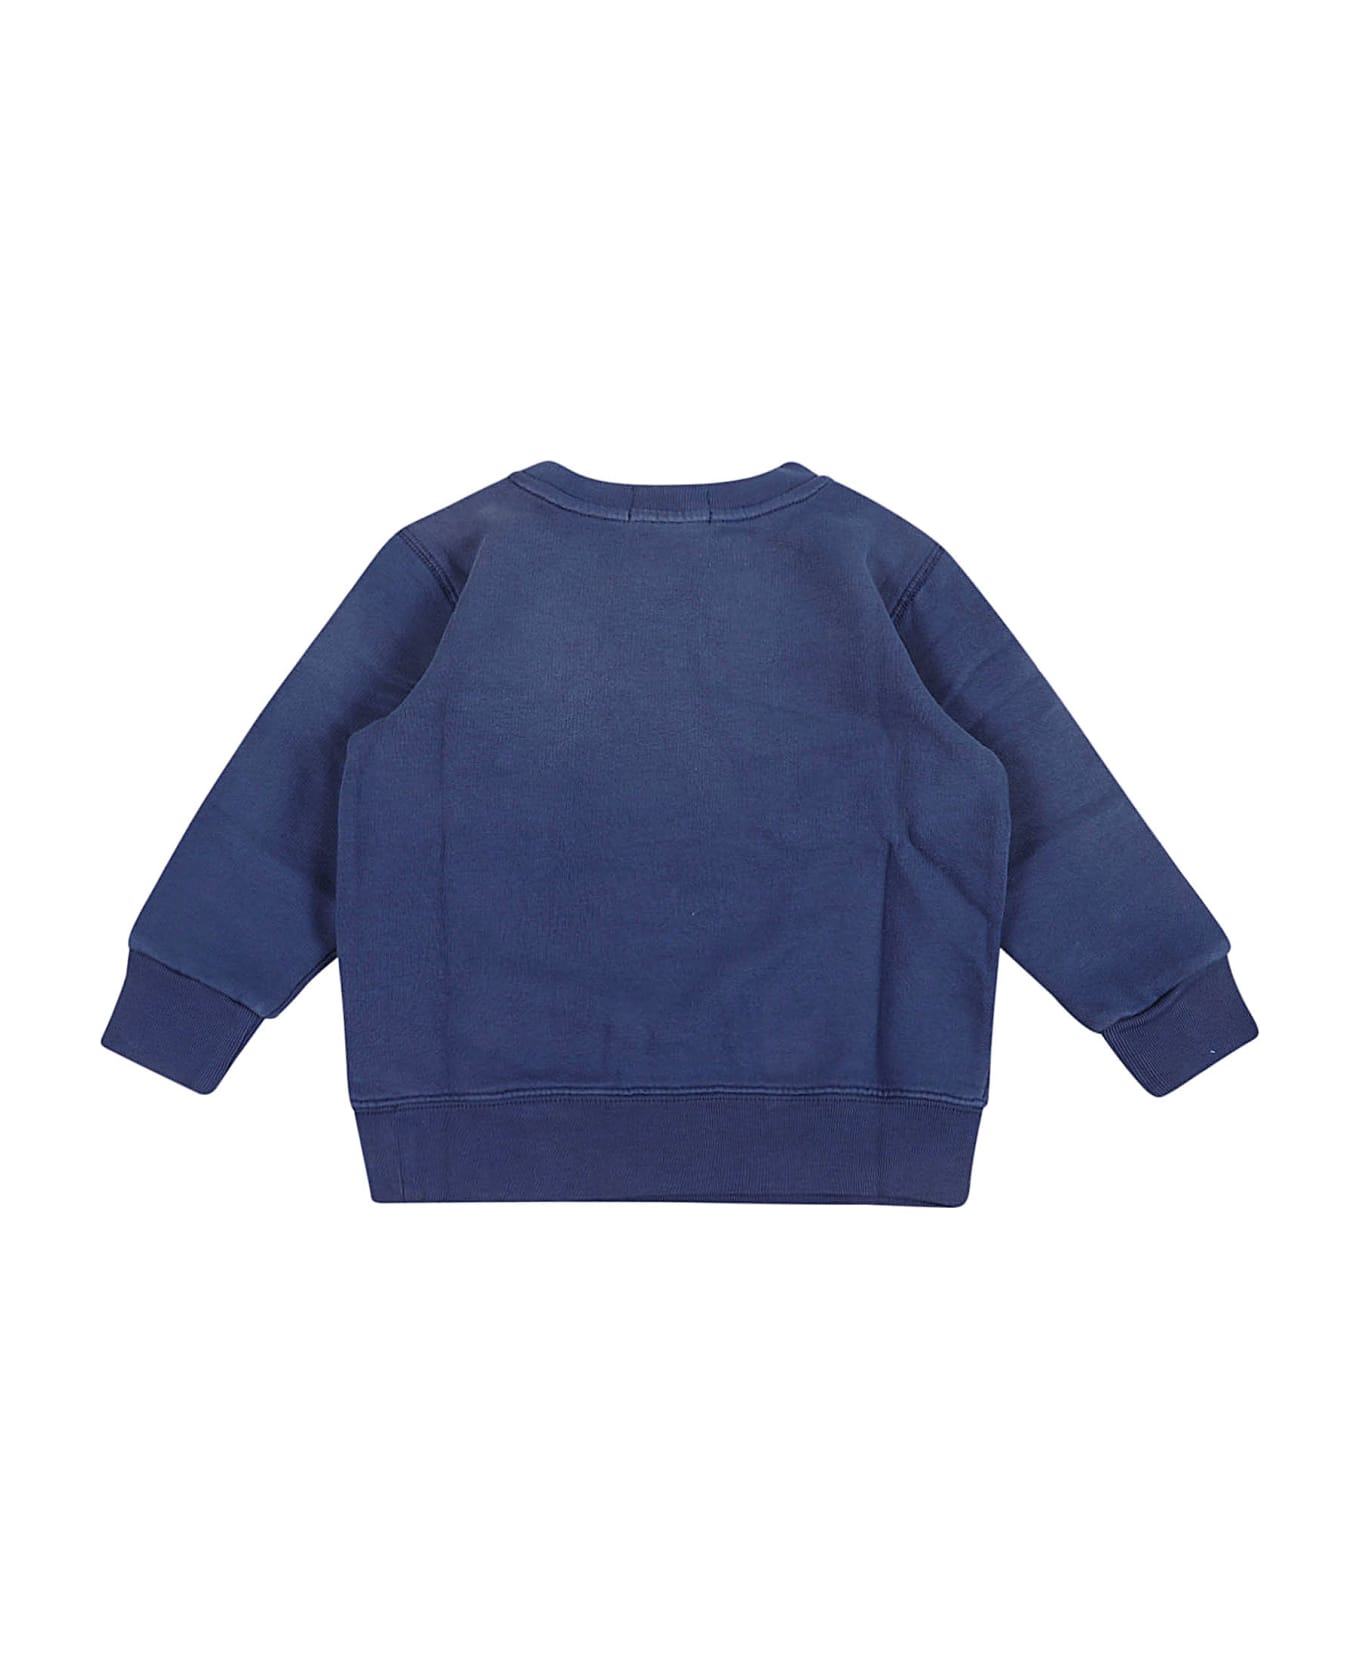 Ralph Lauren Lscnm1-knit Shirts-sweatshirt - Freshwater